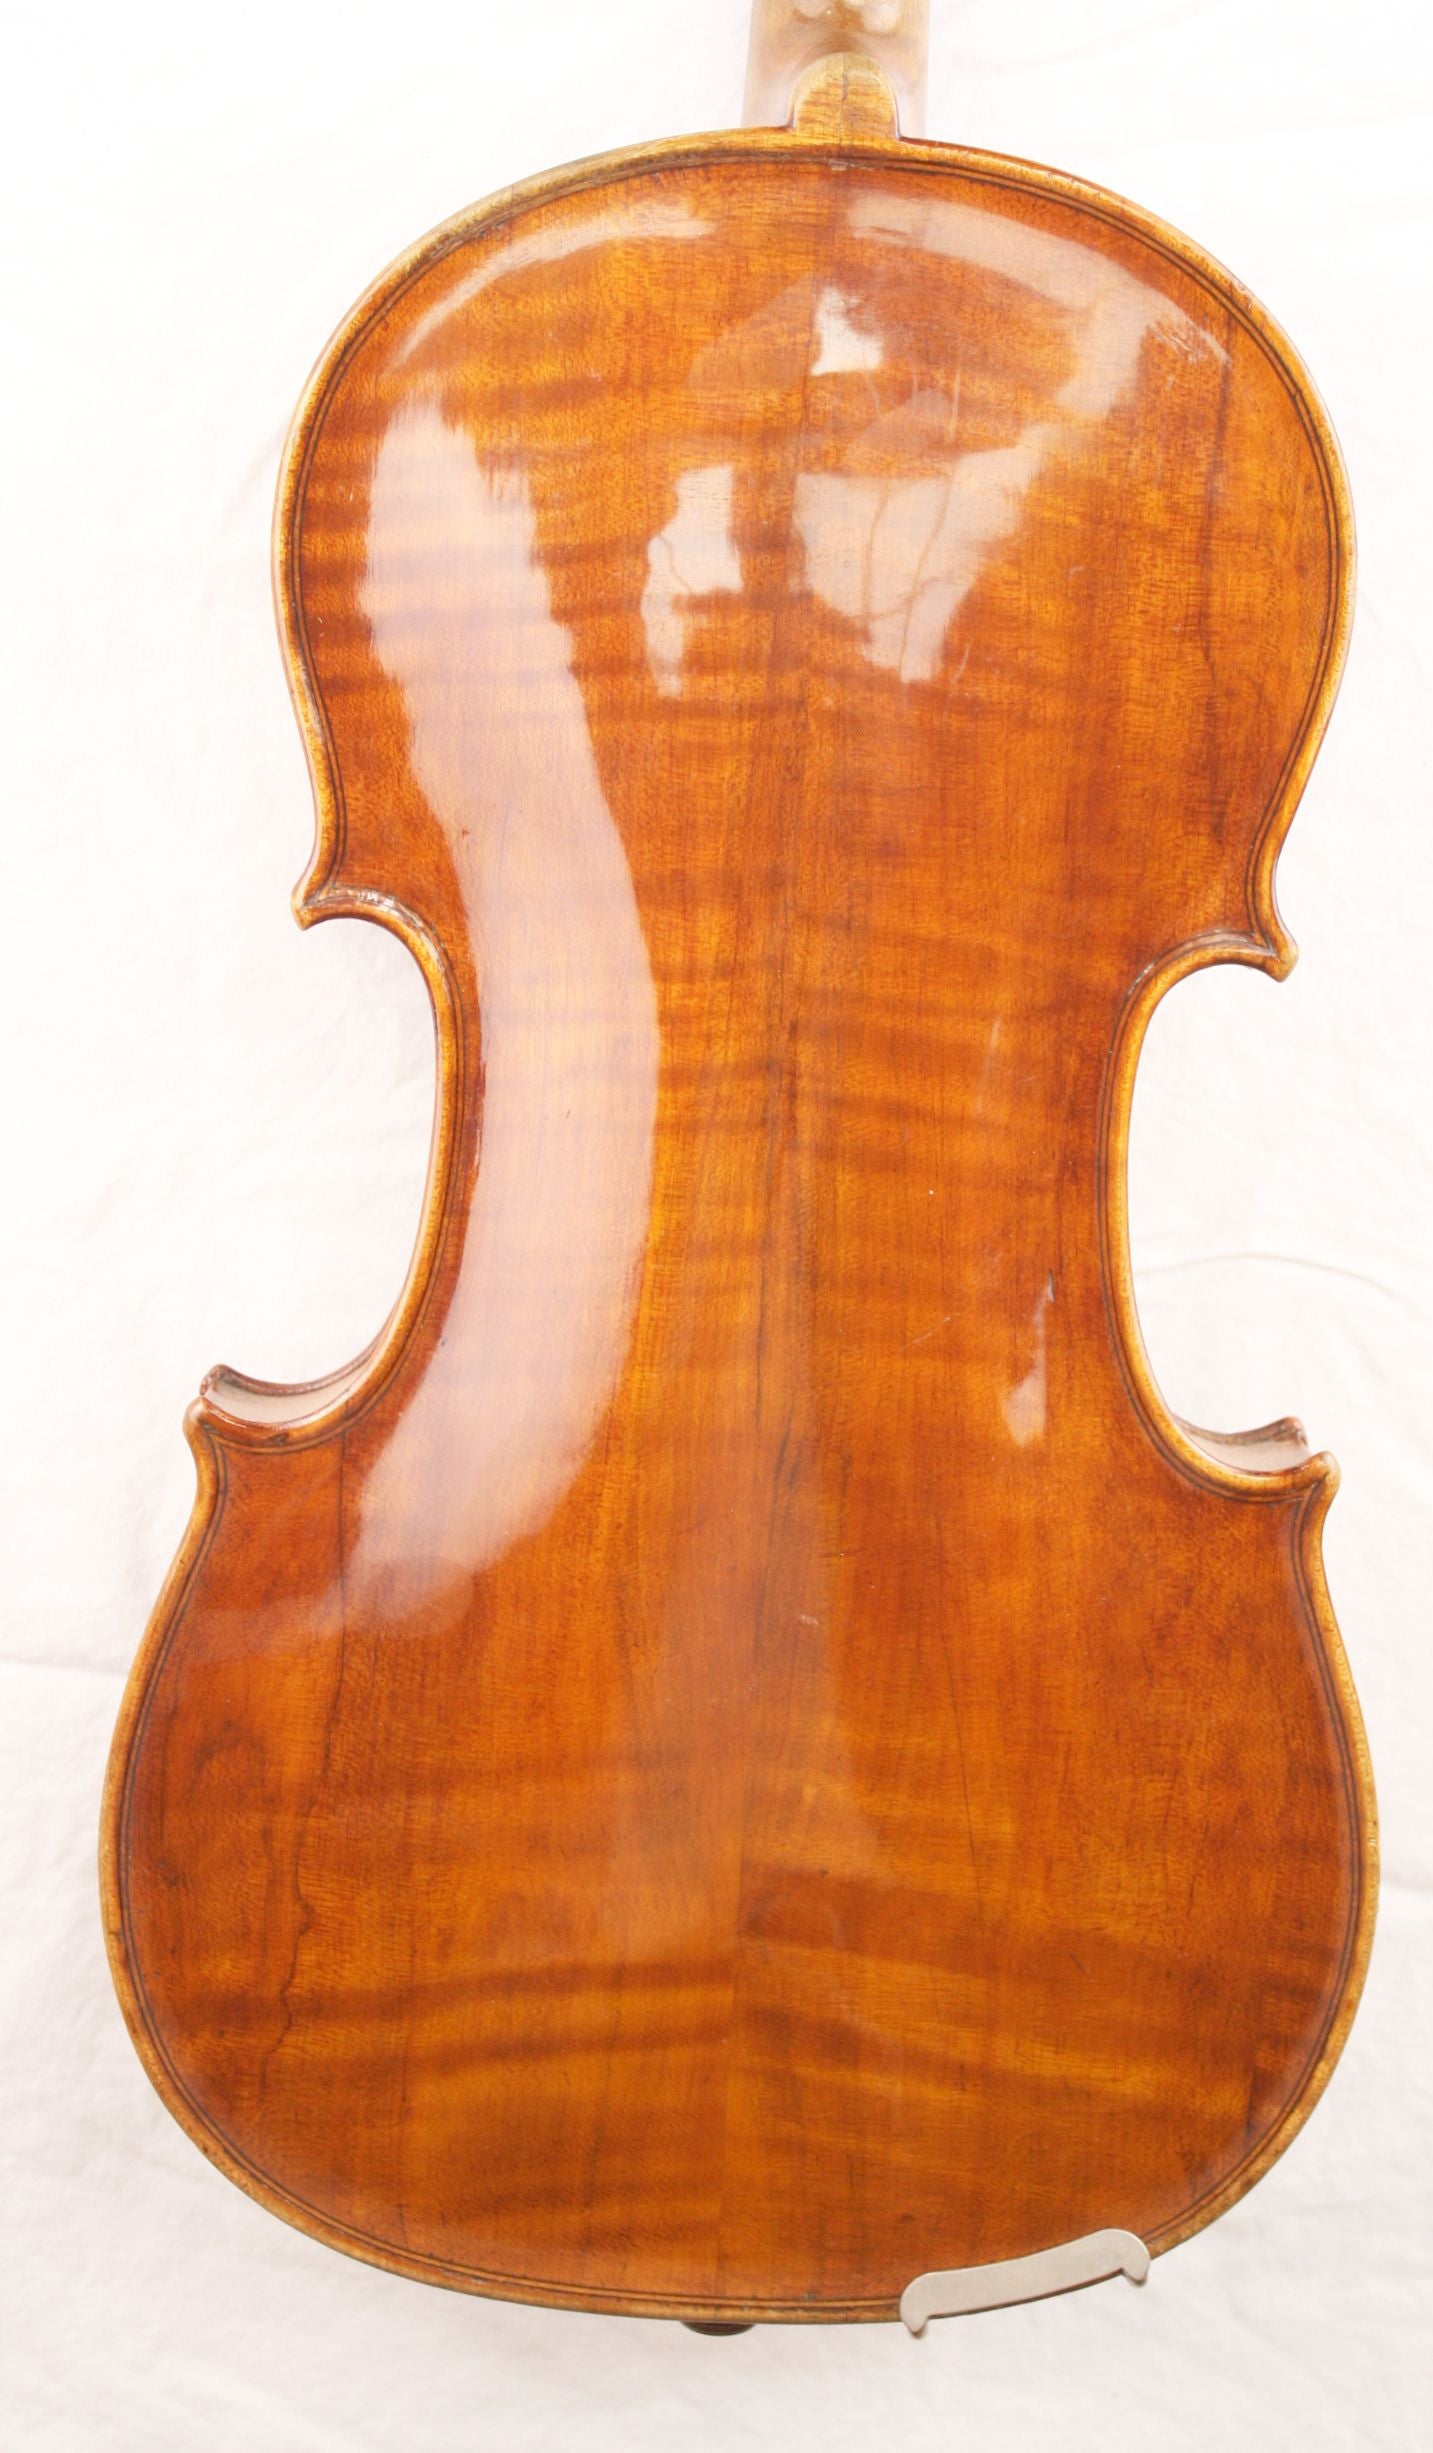 Fremskreden fad campingvogn Italian violin-Ettore Soffriti-Ferrara-1924 - Dov Music